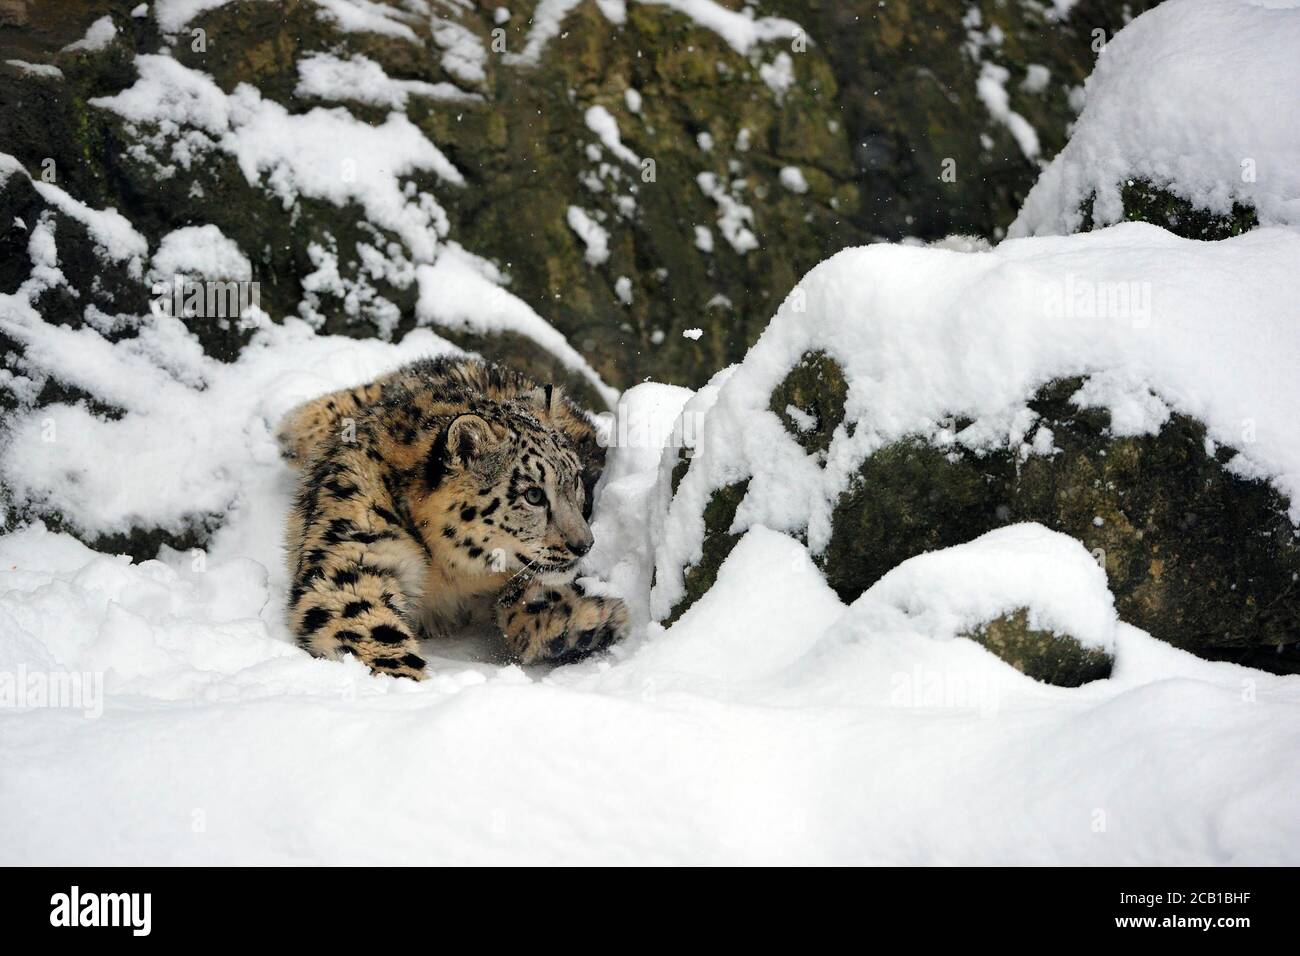 Giovane leopardo di neve (Panthera uncia), prigioniero, strisciando attraverso la neve, Himalaya evento, Pamir, Hindukush, Altaj, Nepal, India, Tibet, Russia Foto Stock